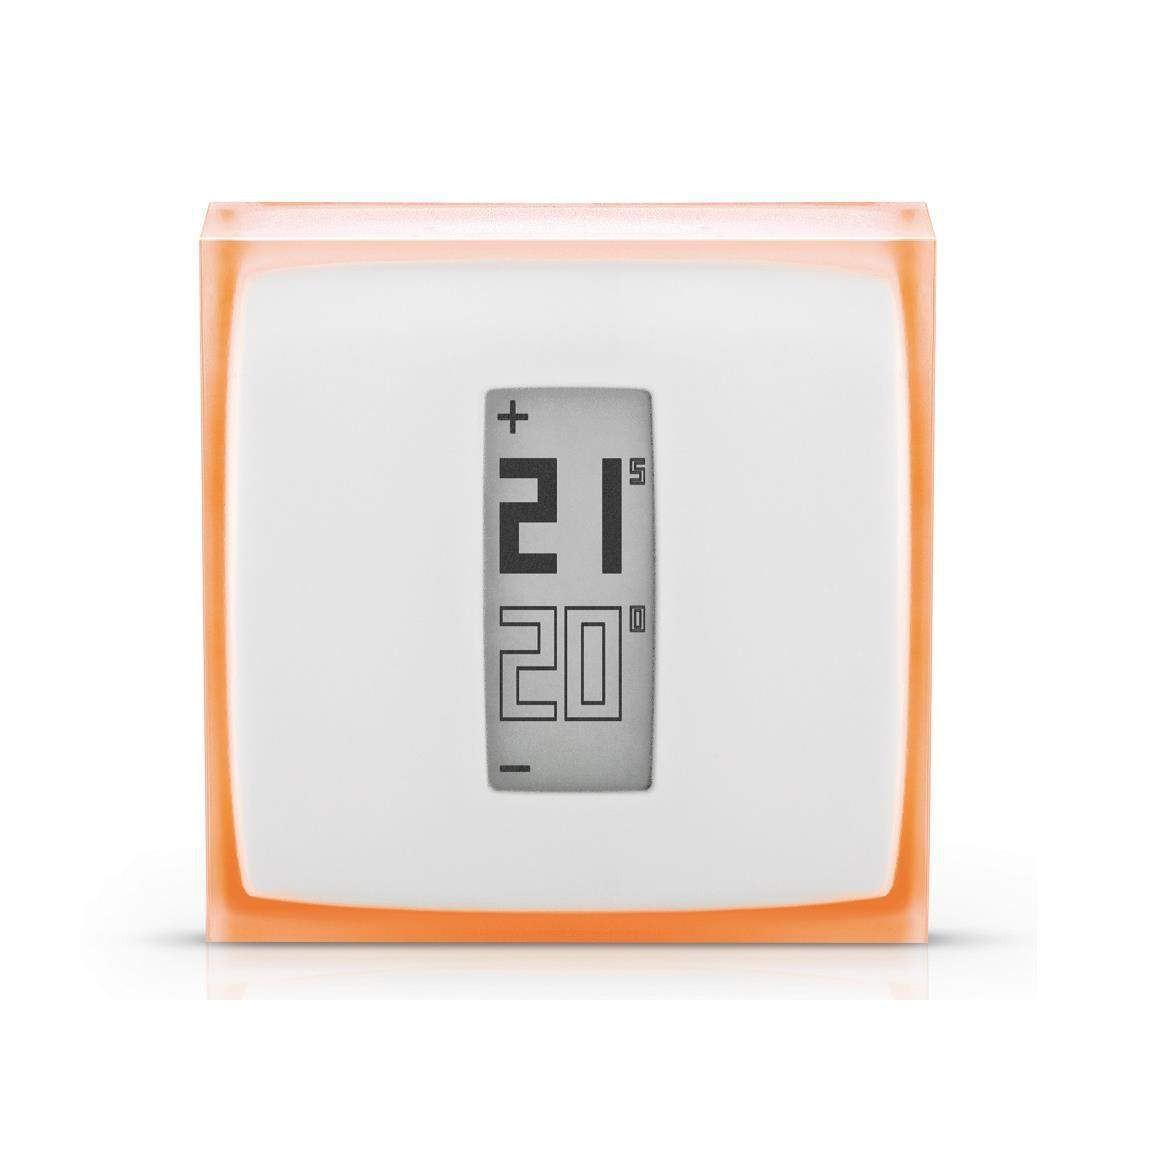 Netatmo Smart Thermostat - Multi-Zone 2er-Set